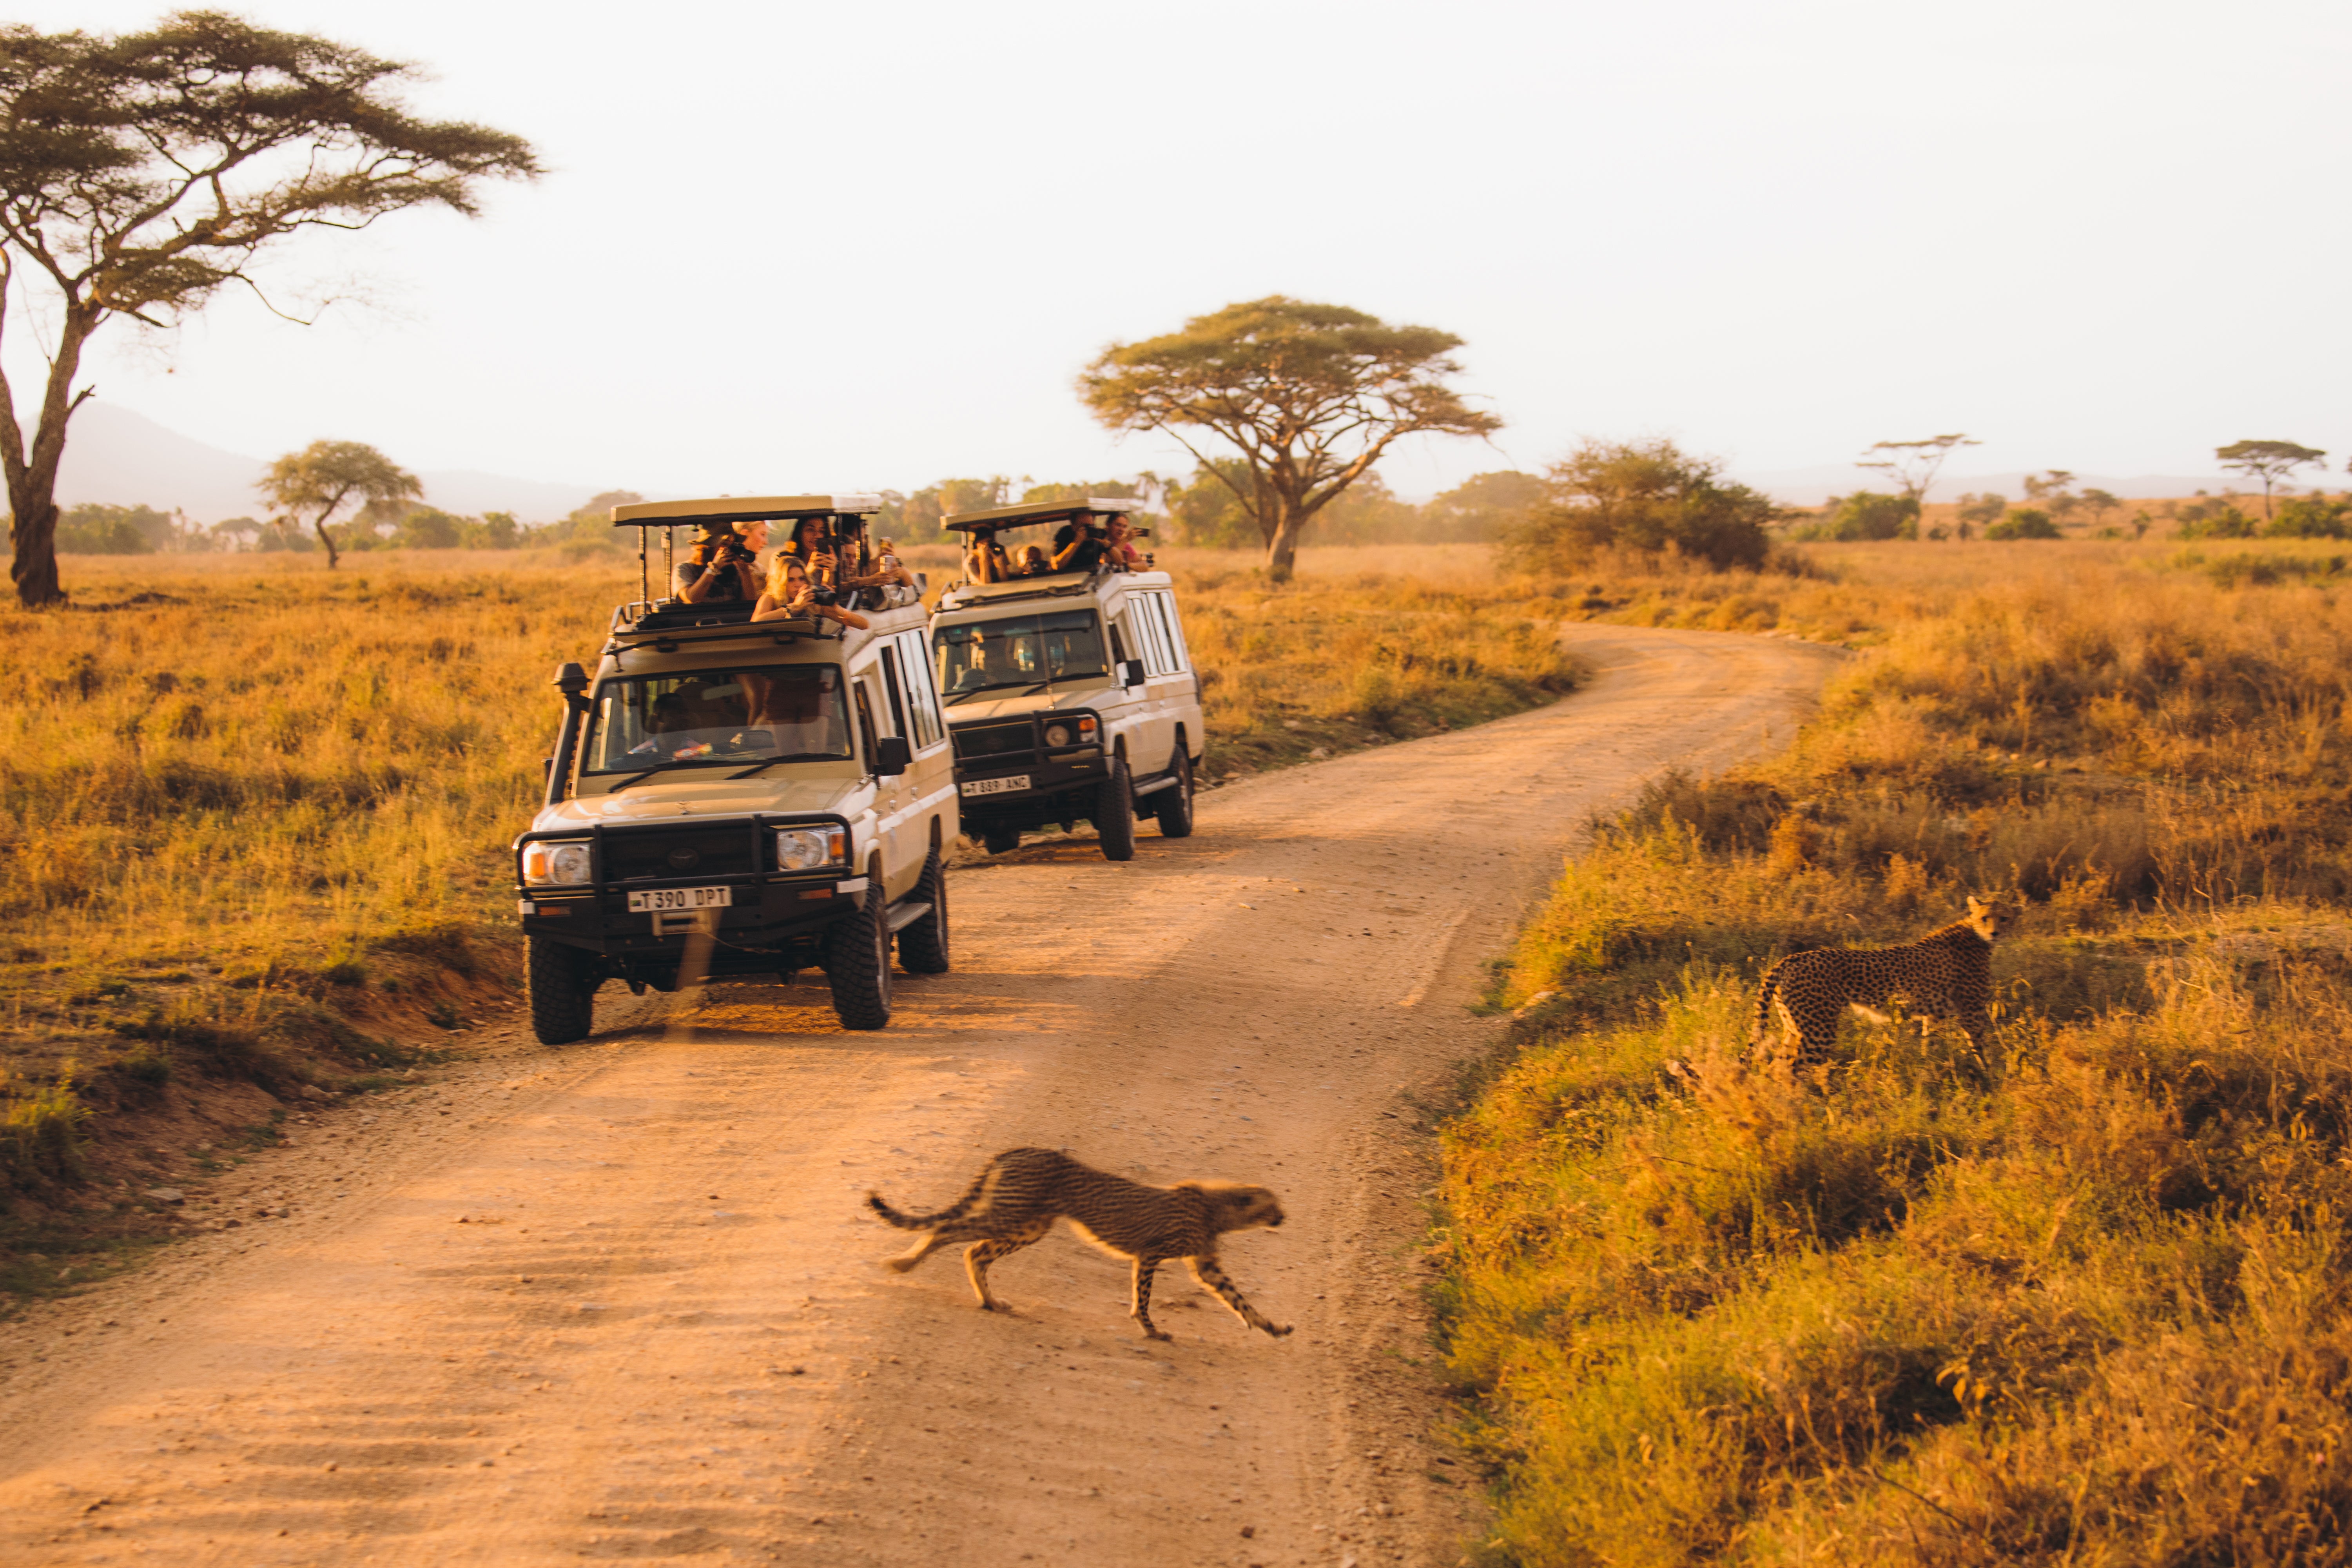 Tour the African savannah of the Serengeti National Park